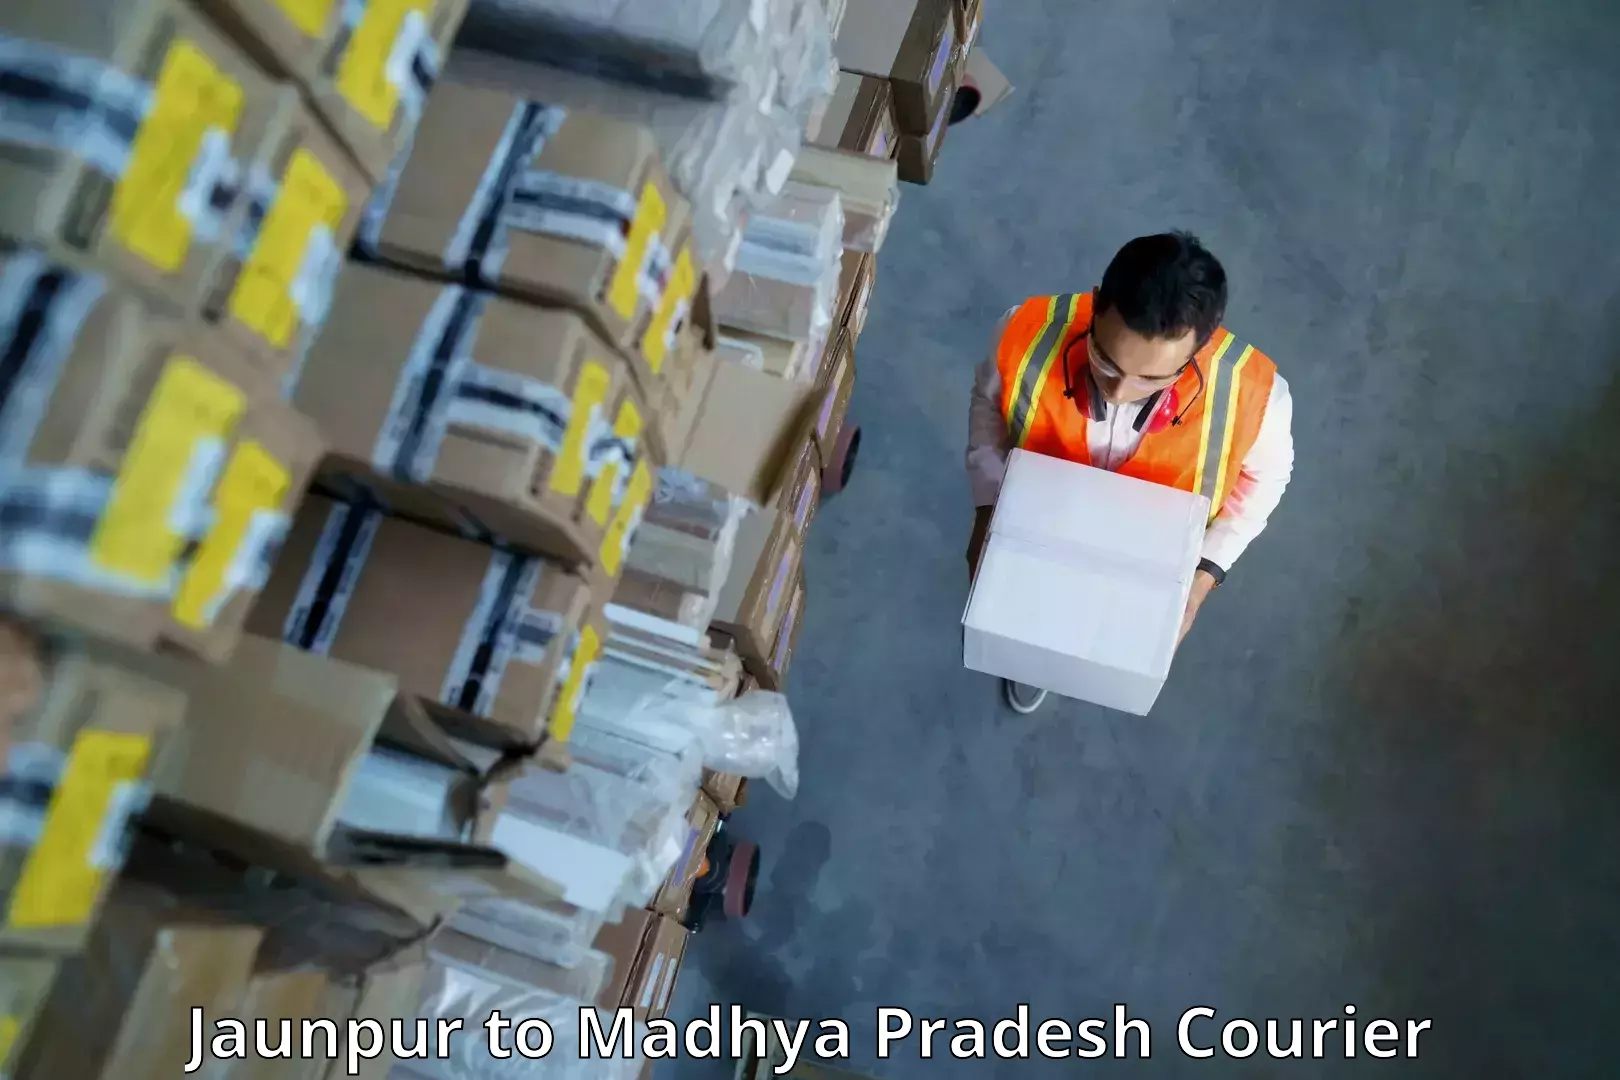 Courier service efficiency Jaunpur to Khargone